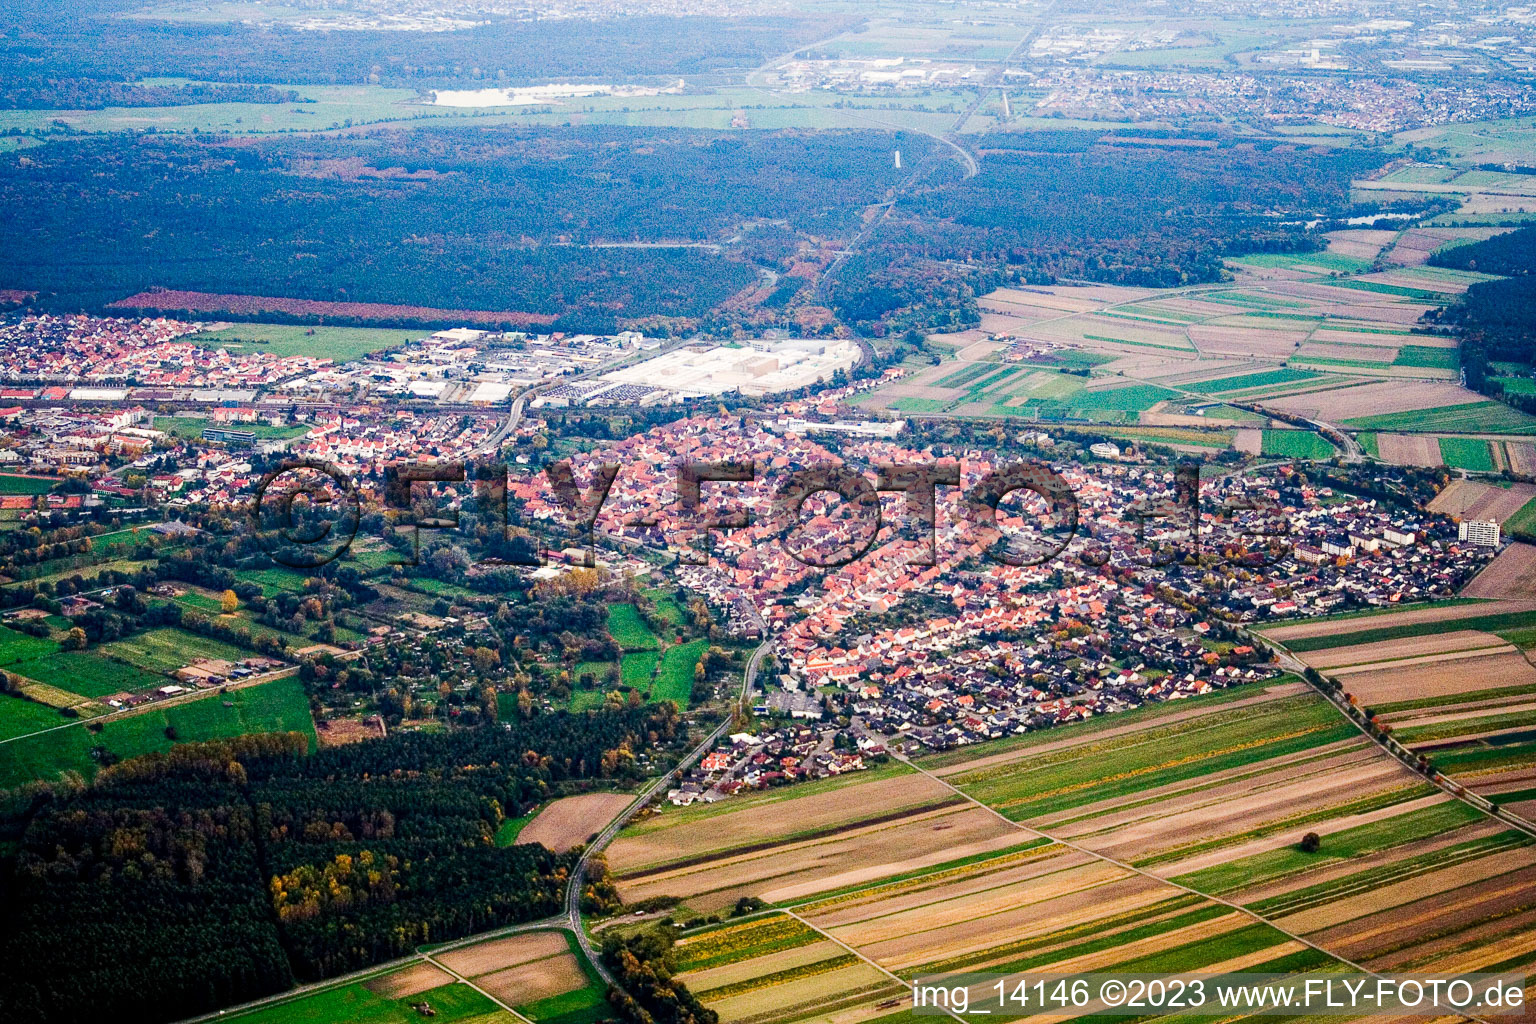 Liedolsheim dans le département Bade-Wurtemberg, Allemagne depuis l'avion